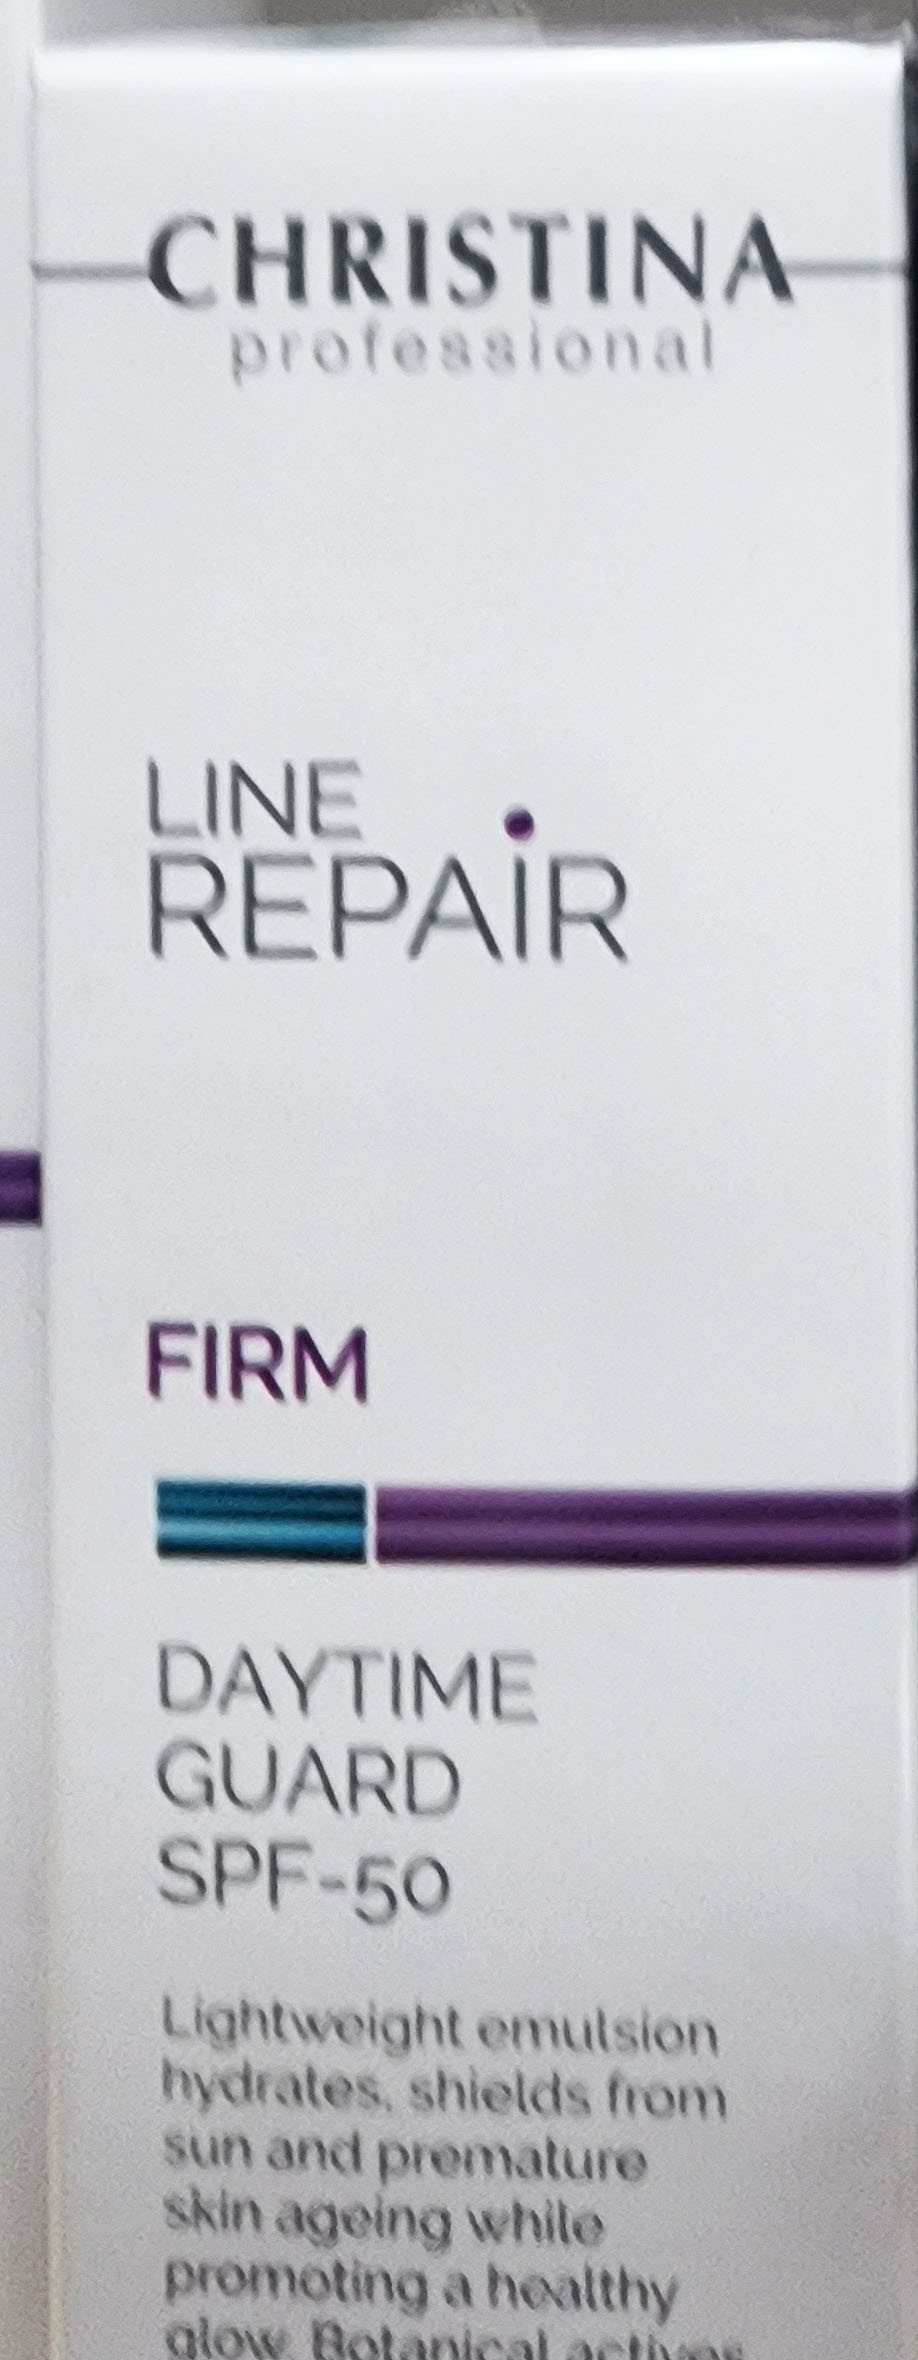 Christina Line Repair - Firm - Daytime guard SPF50 60ml